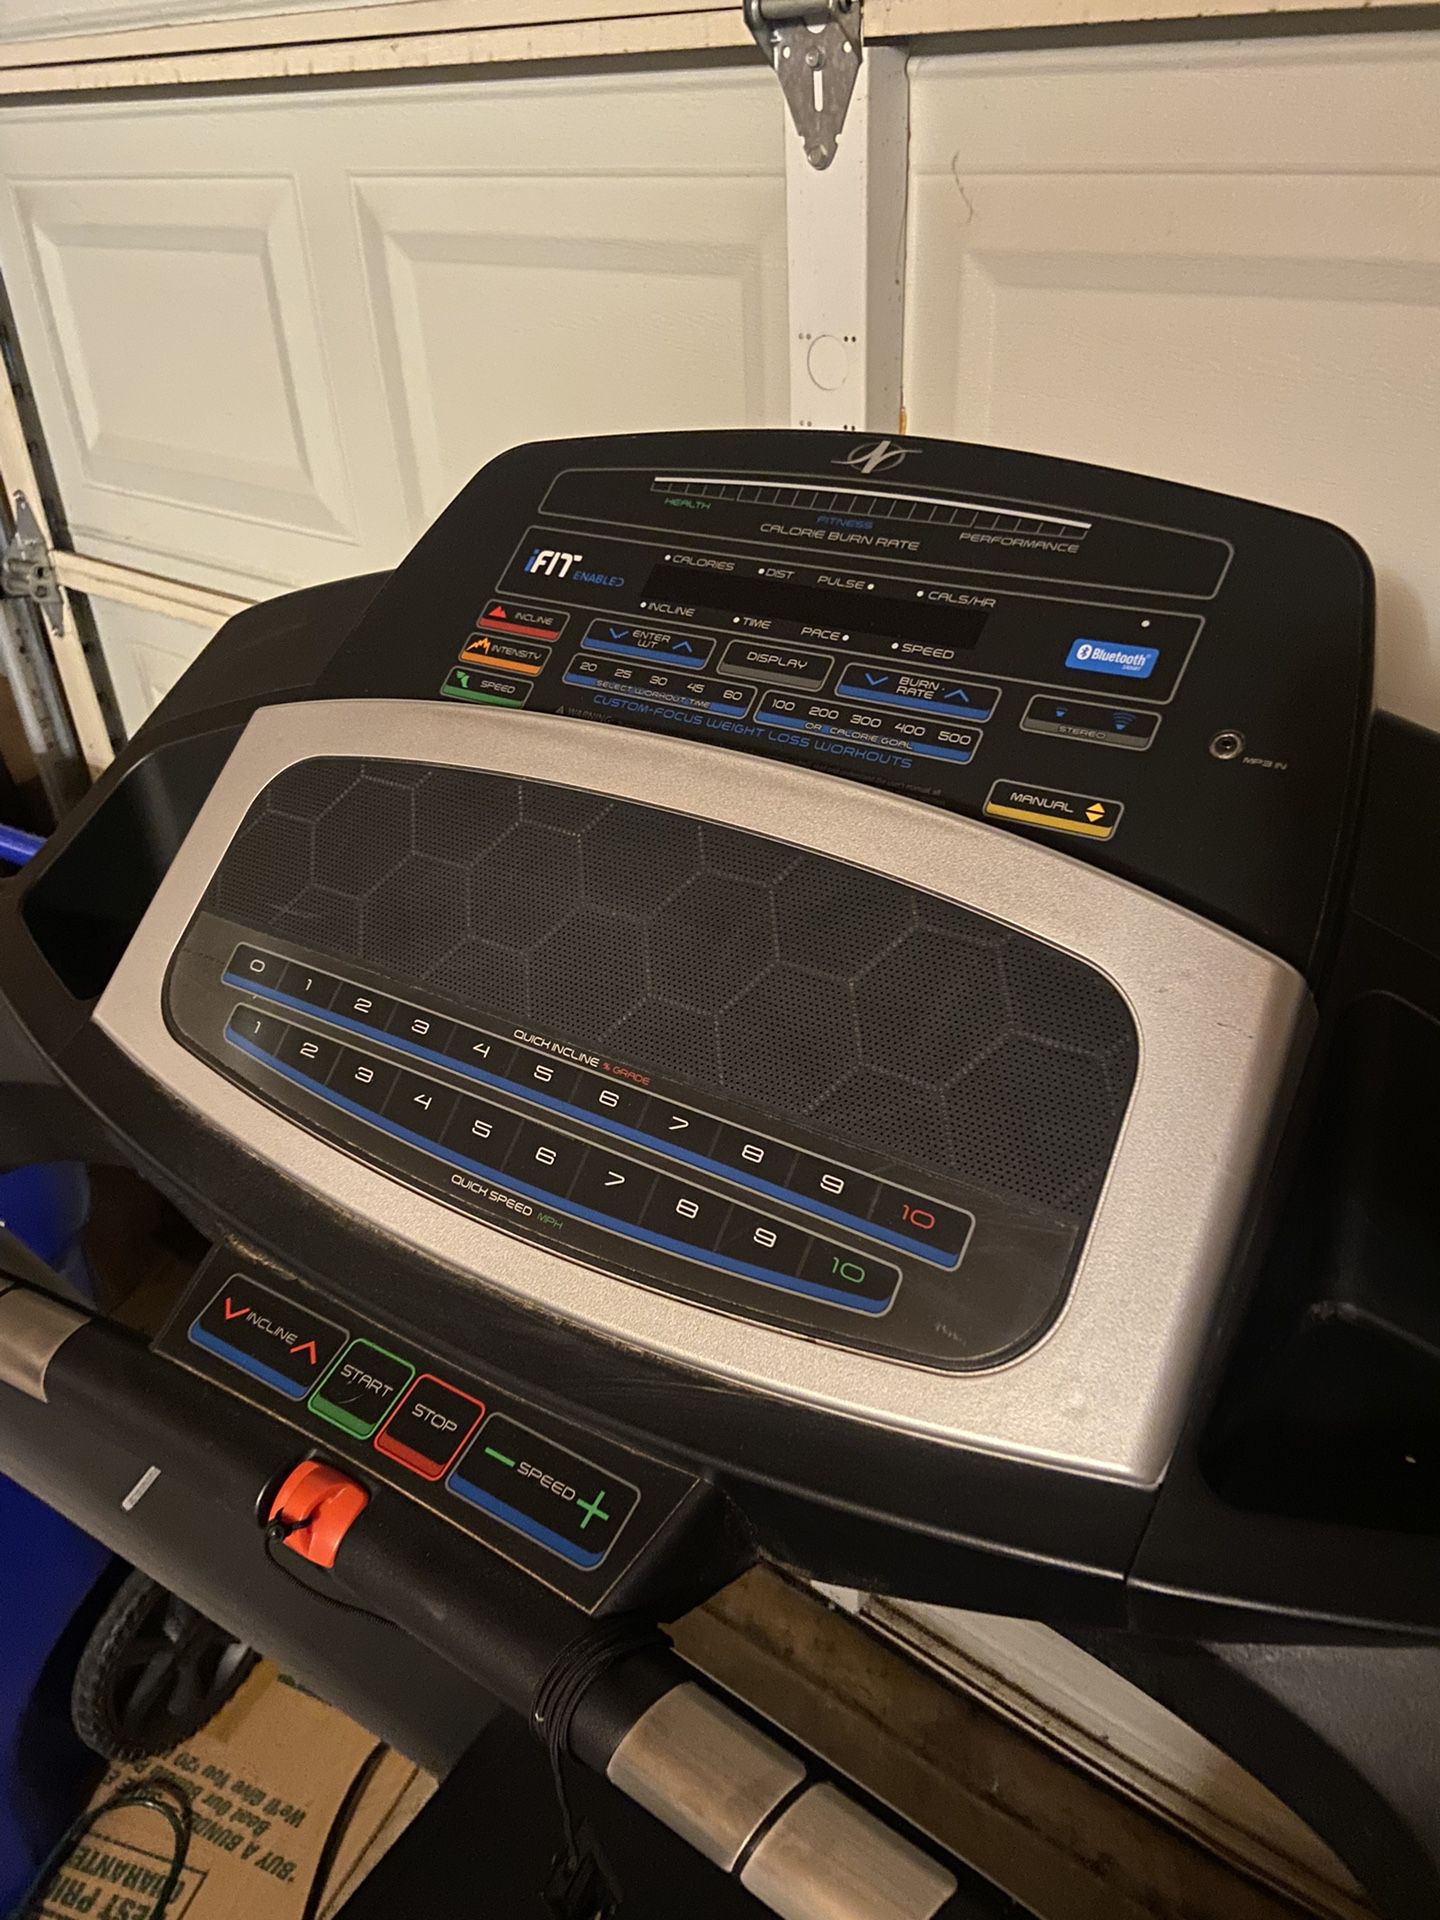 NordicTrack Treadmill in Great Condition 